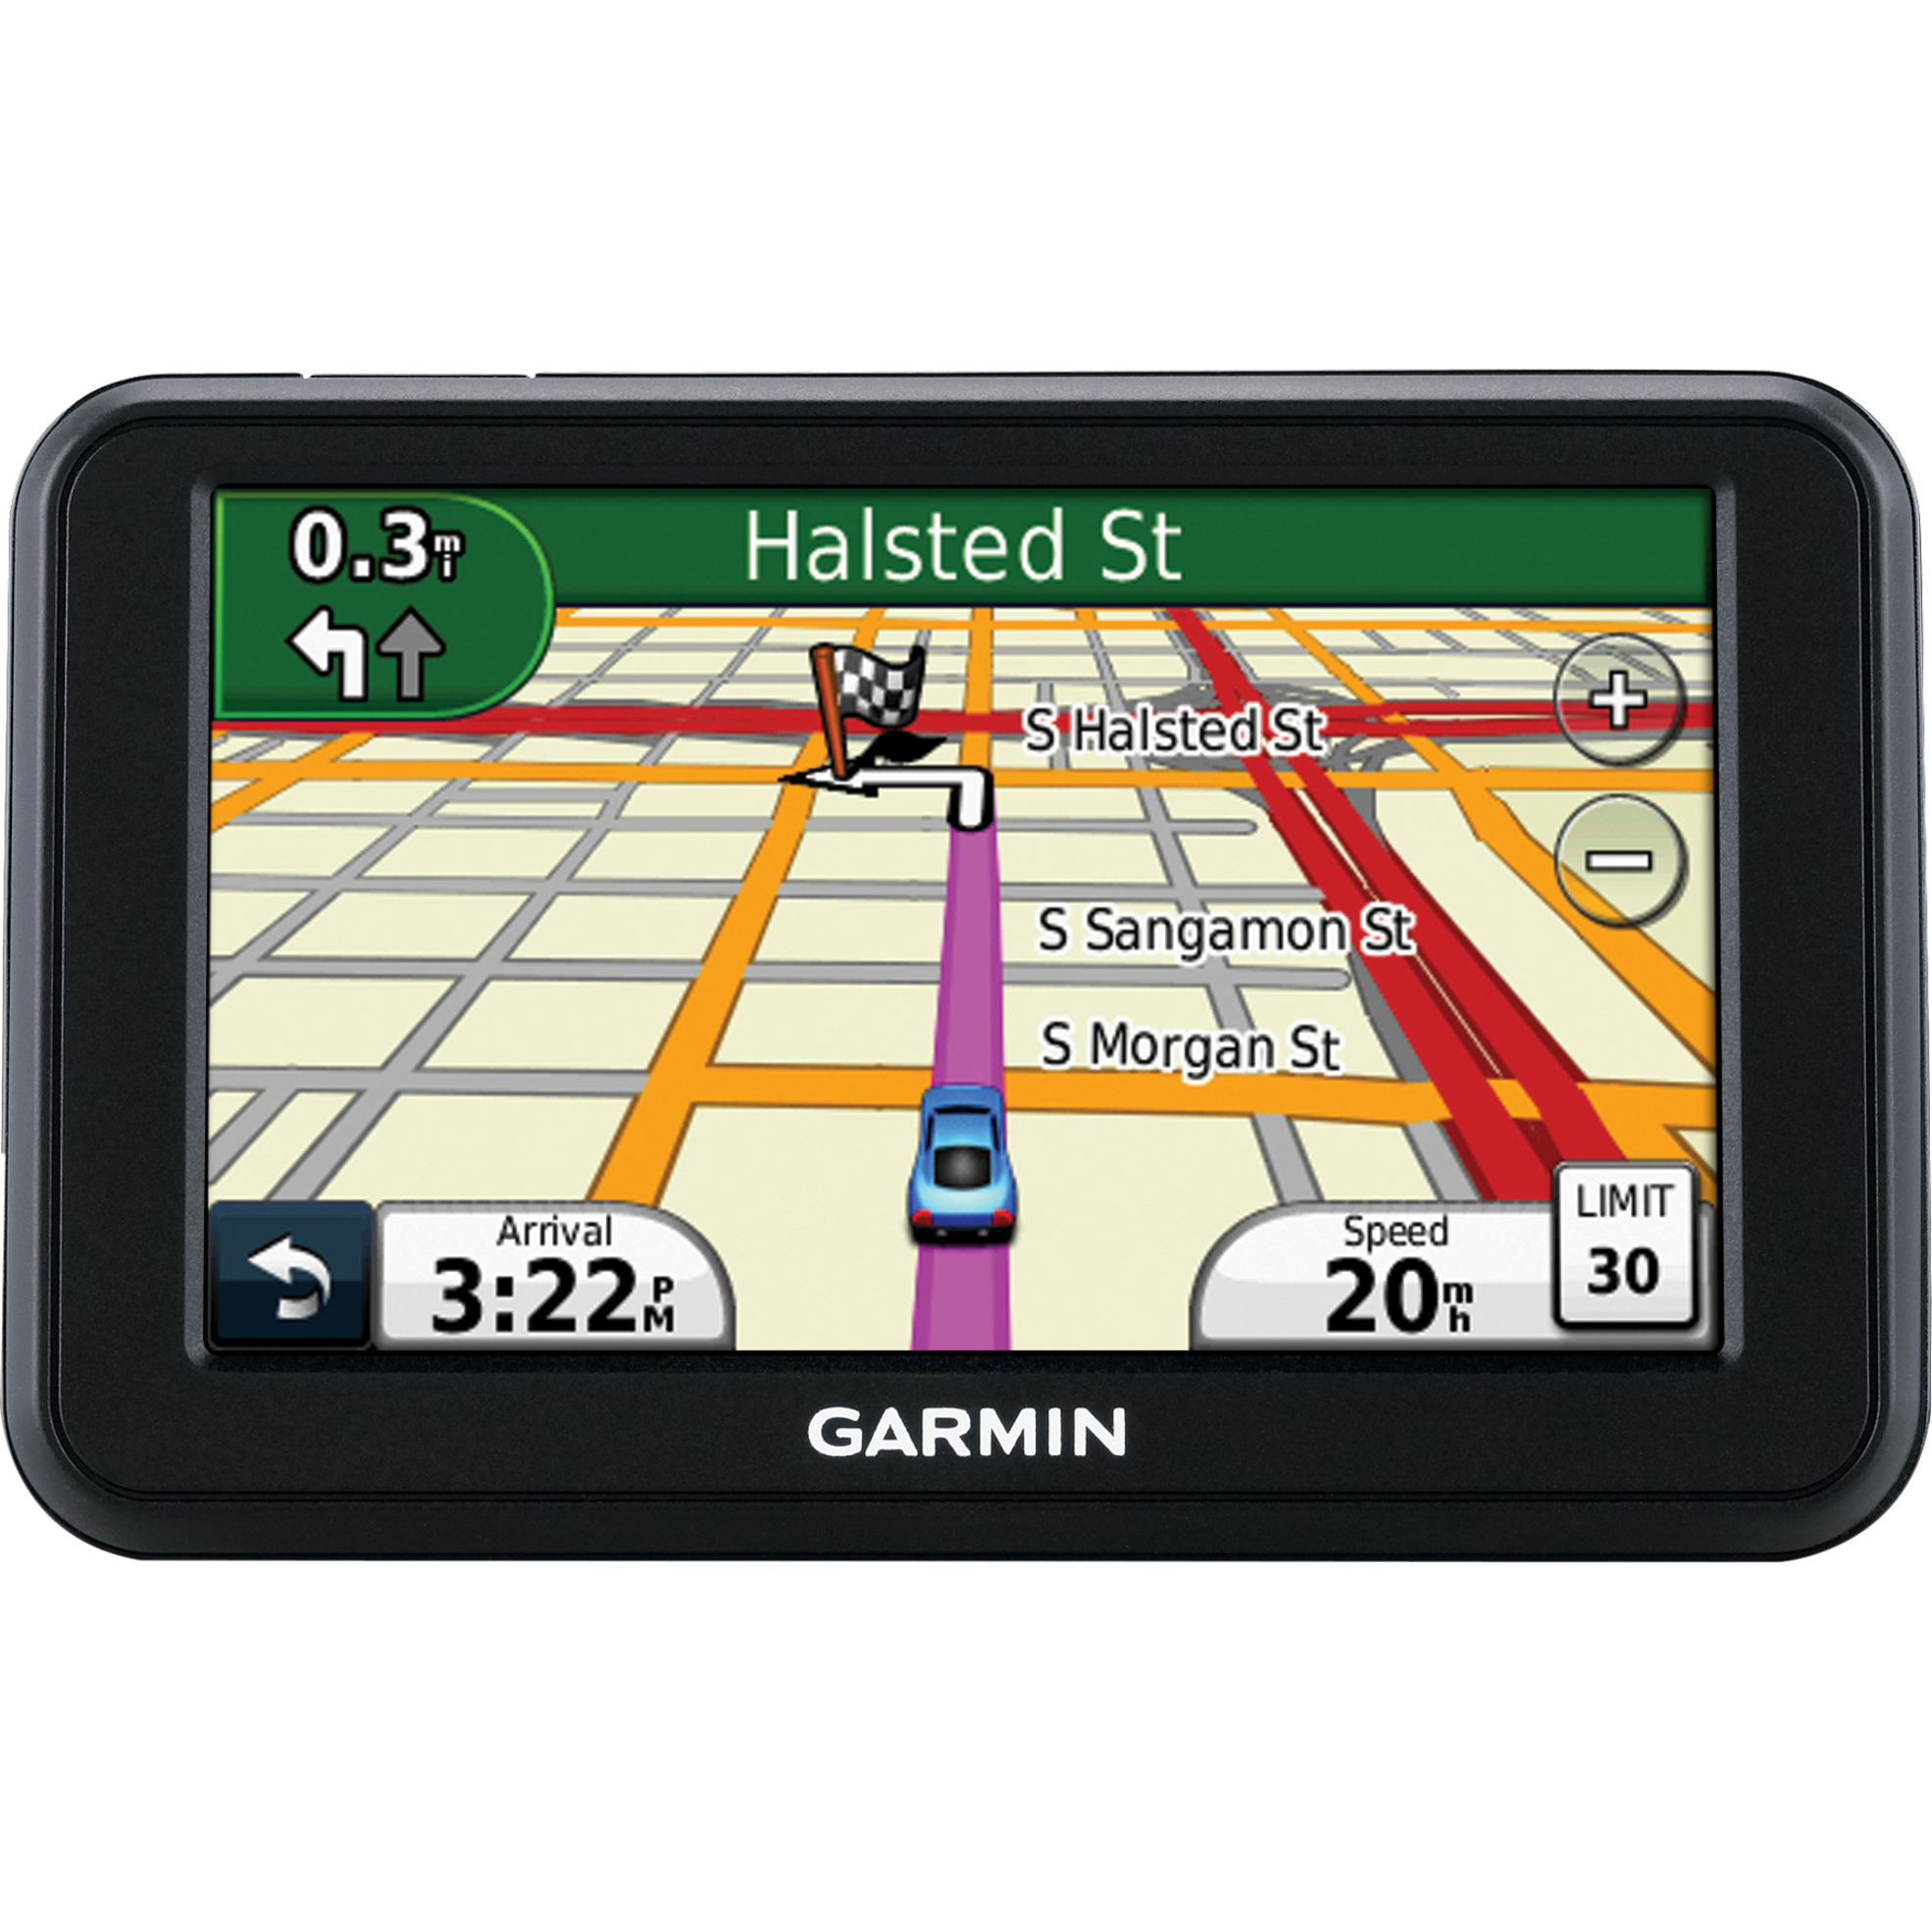 Garmin nüvi 40 Automobile Portable GPS Navigator - image 1 of 2